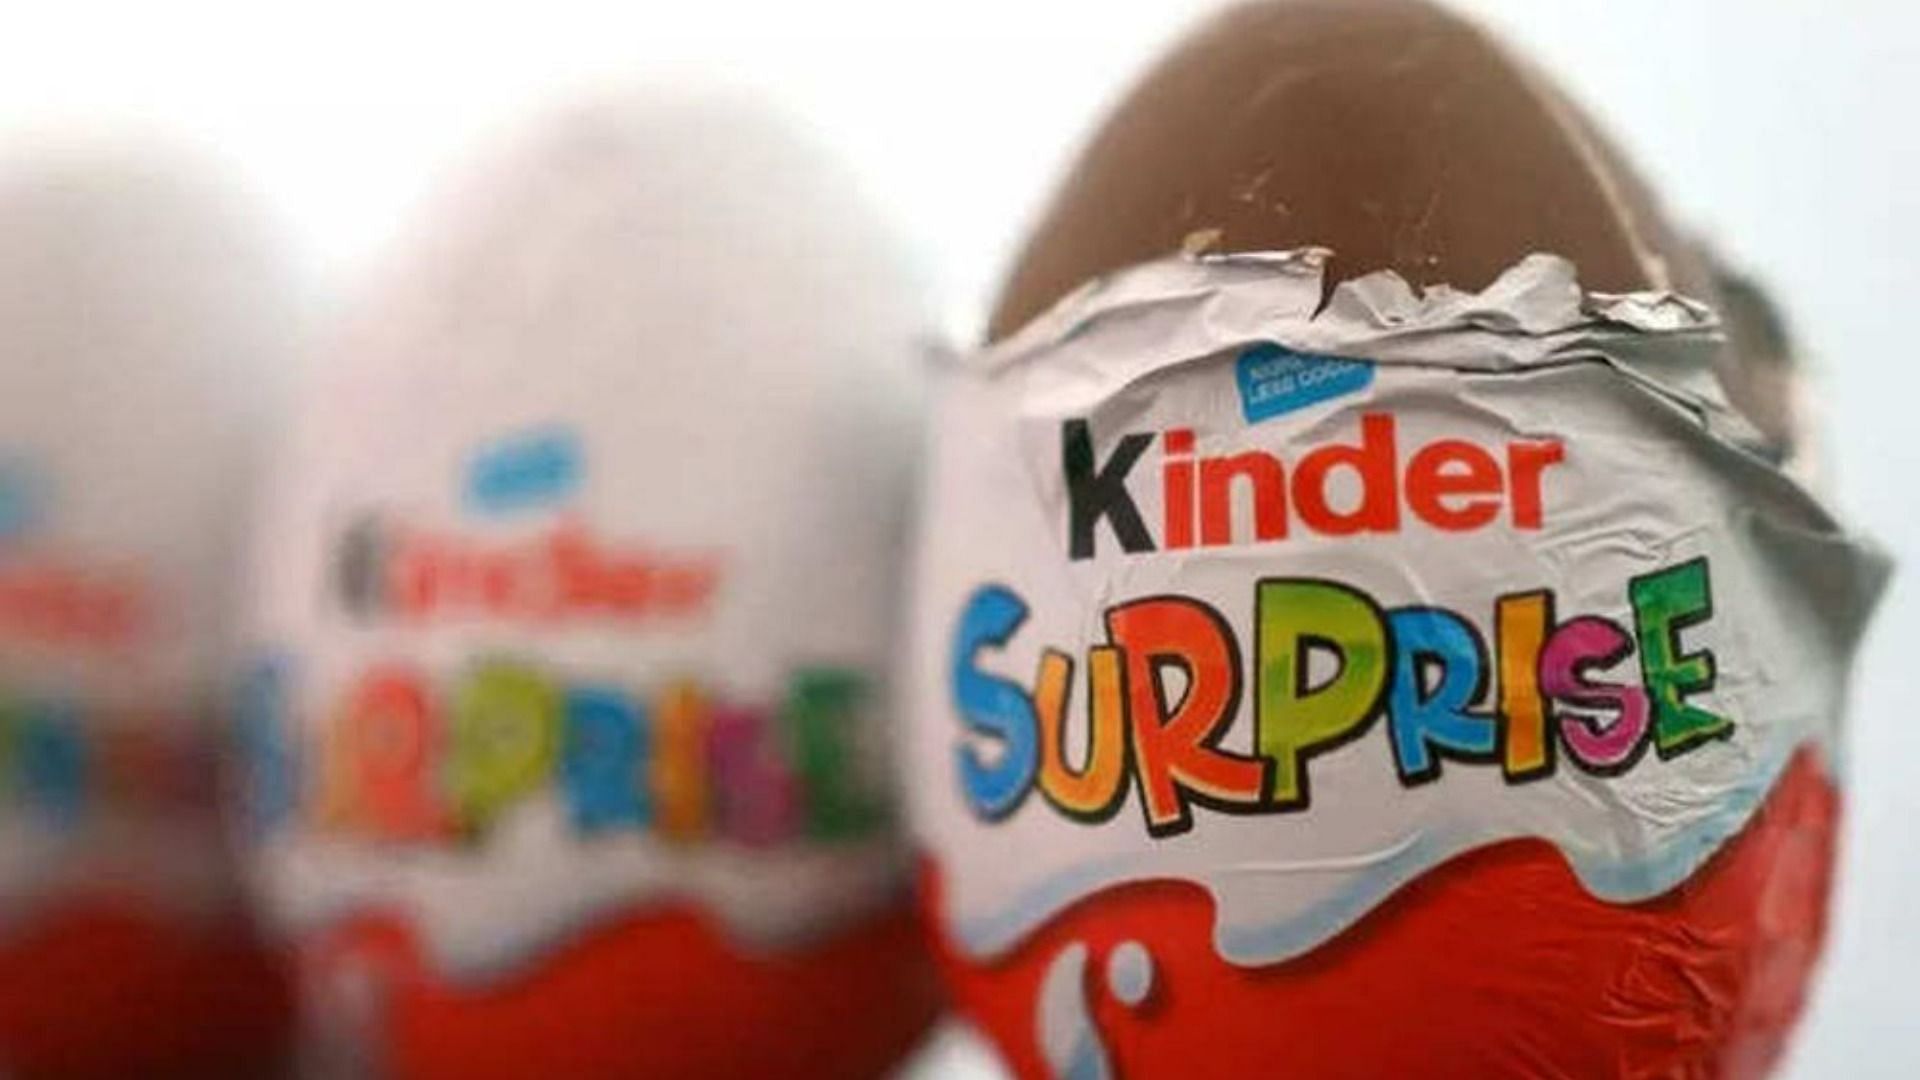 Kinder chocolate eggs recalled by Ferrero following Salmonella outbreak (Image via Victoria Jones/Getty Images)